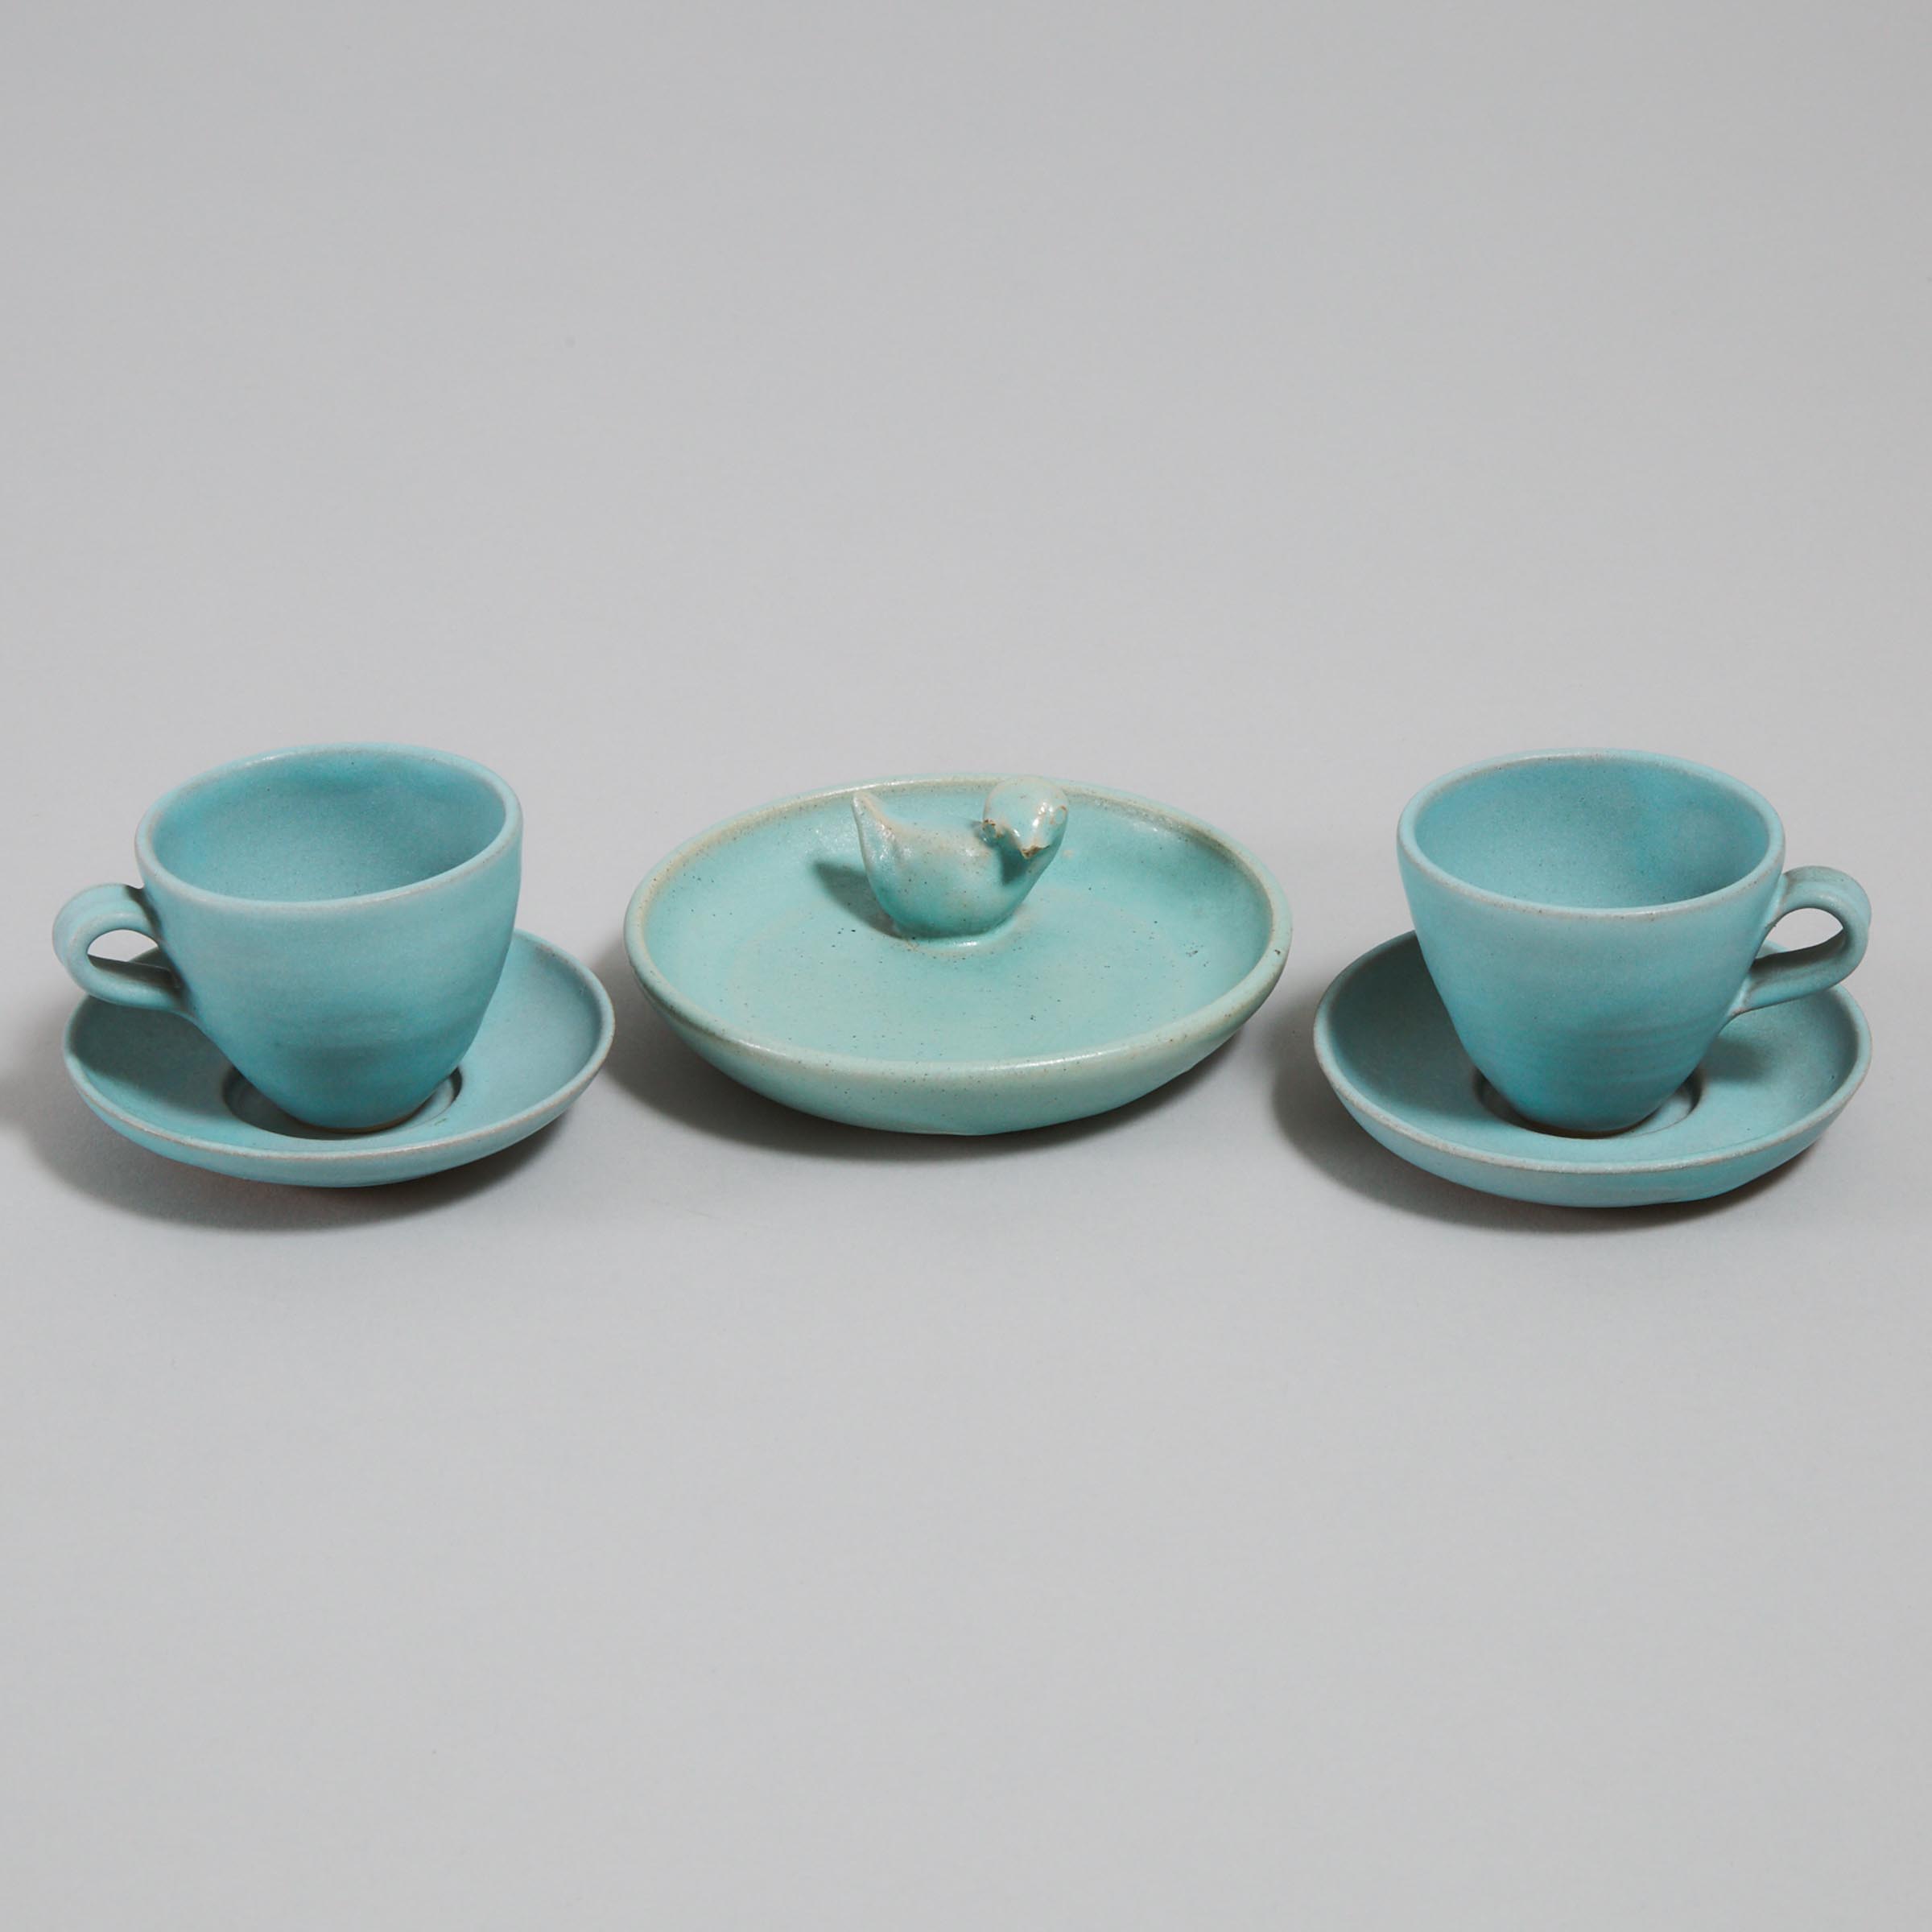 Deichmann Blue Glazed Small Bird Dish and a Pair of Coffee Cups and Saucers, Kjeld & Erica Deichmann, mid-20th century